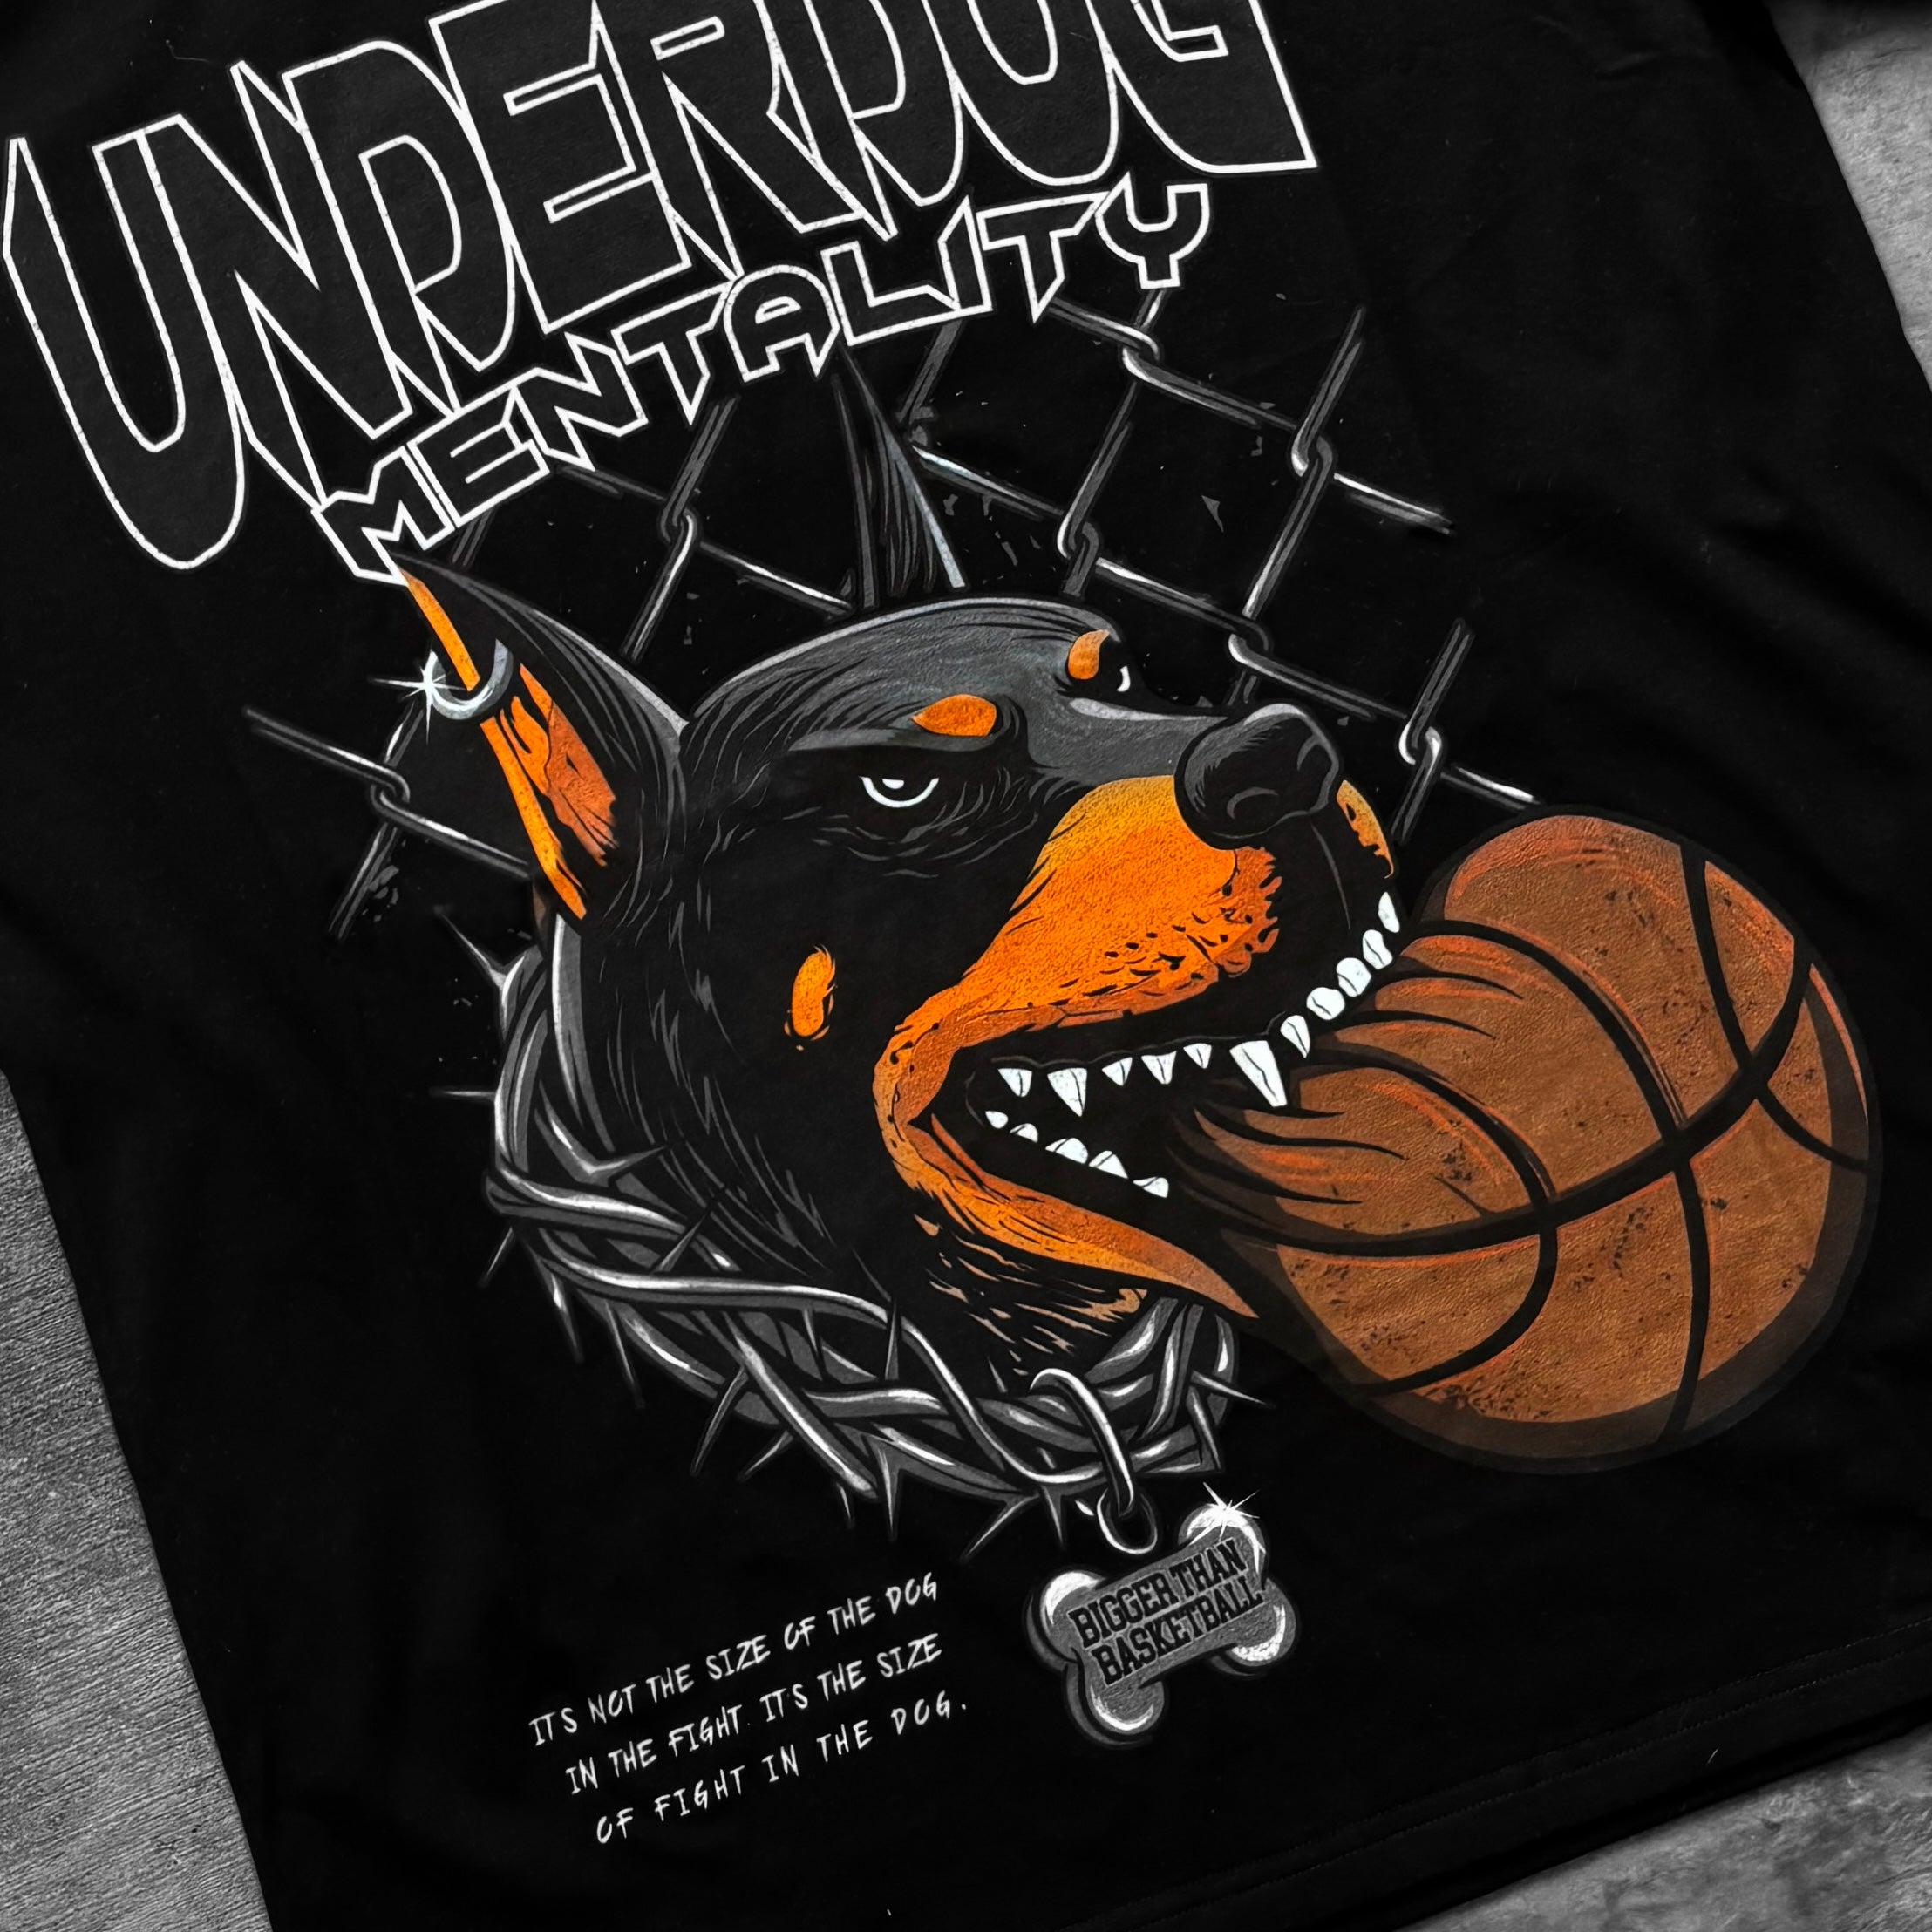 Underdog Mentality - T-Shirt - Black